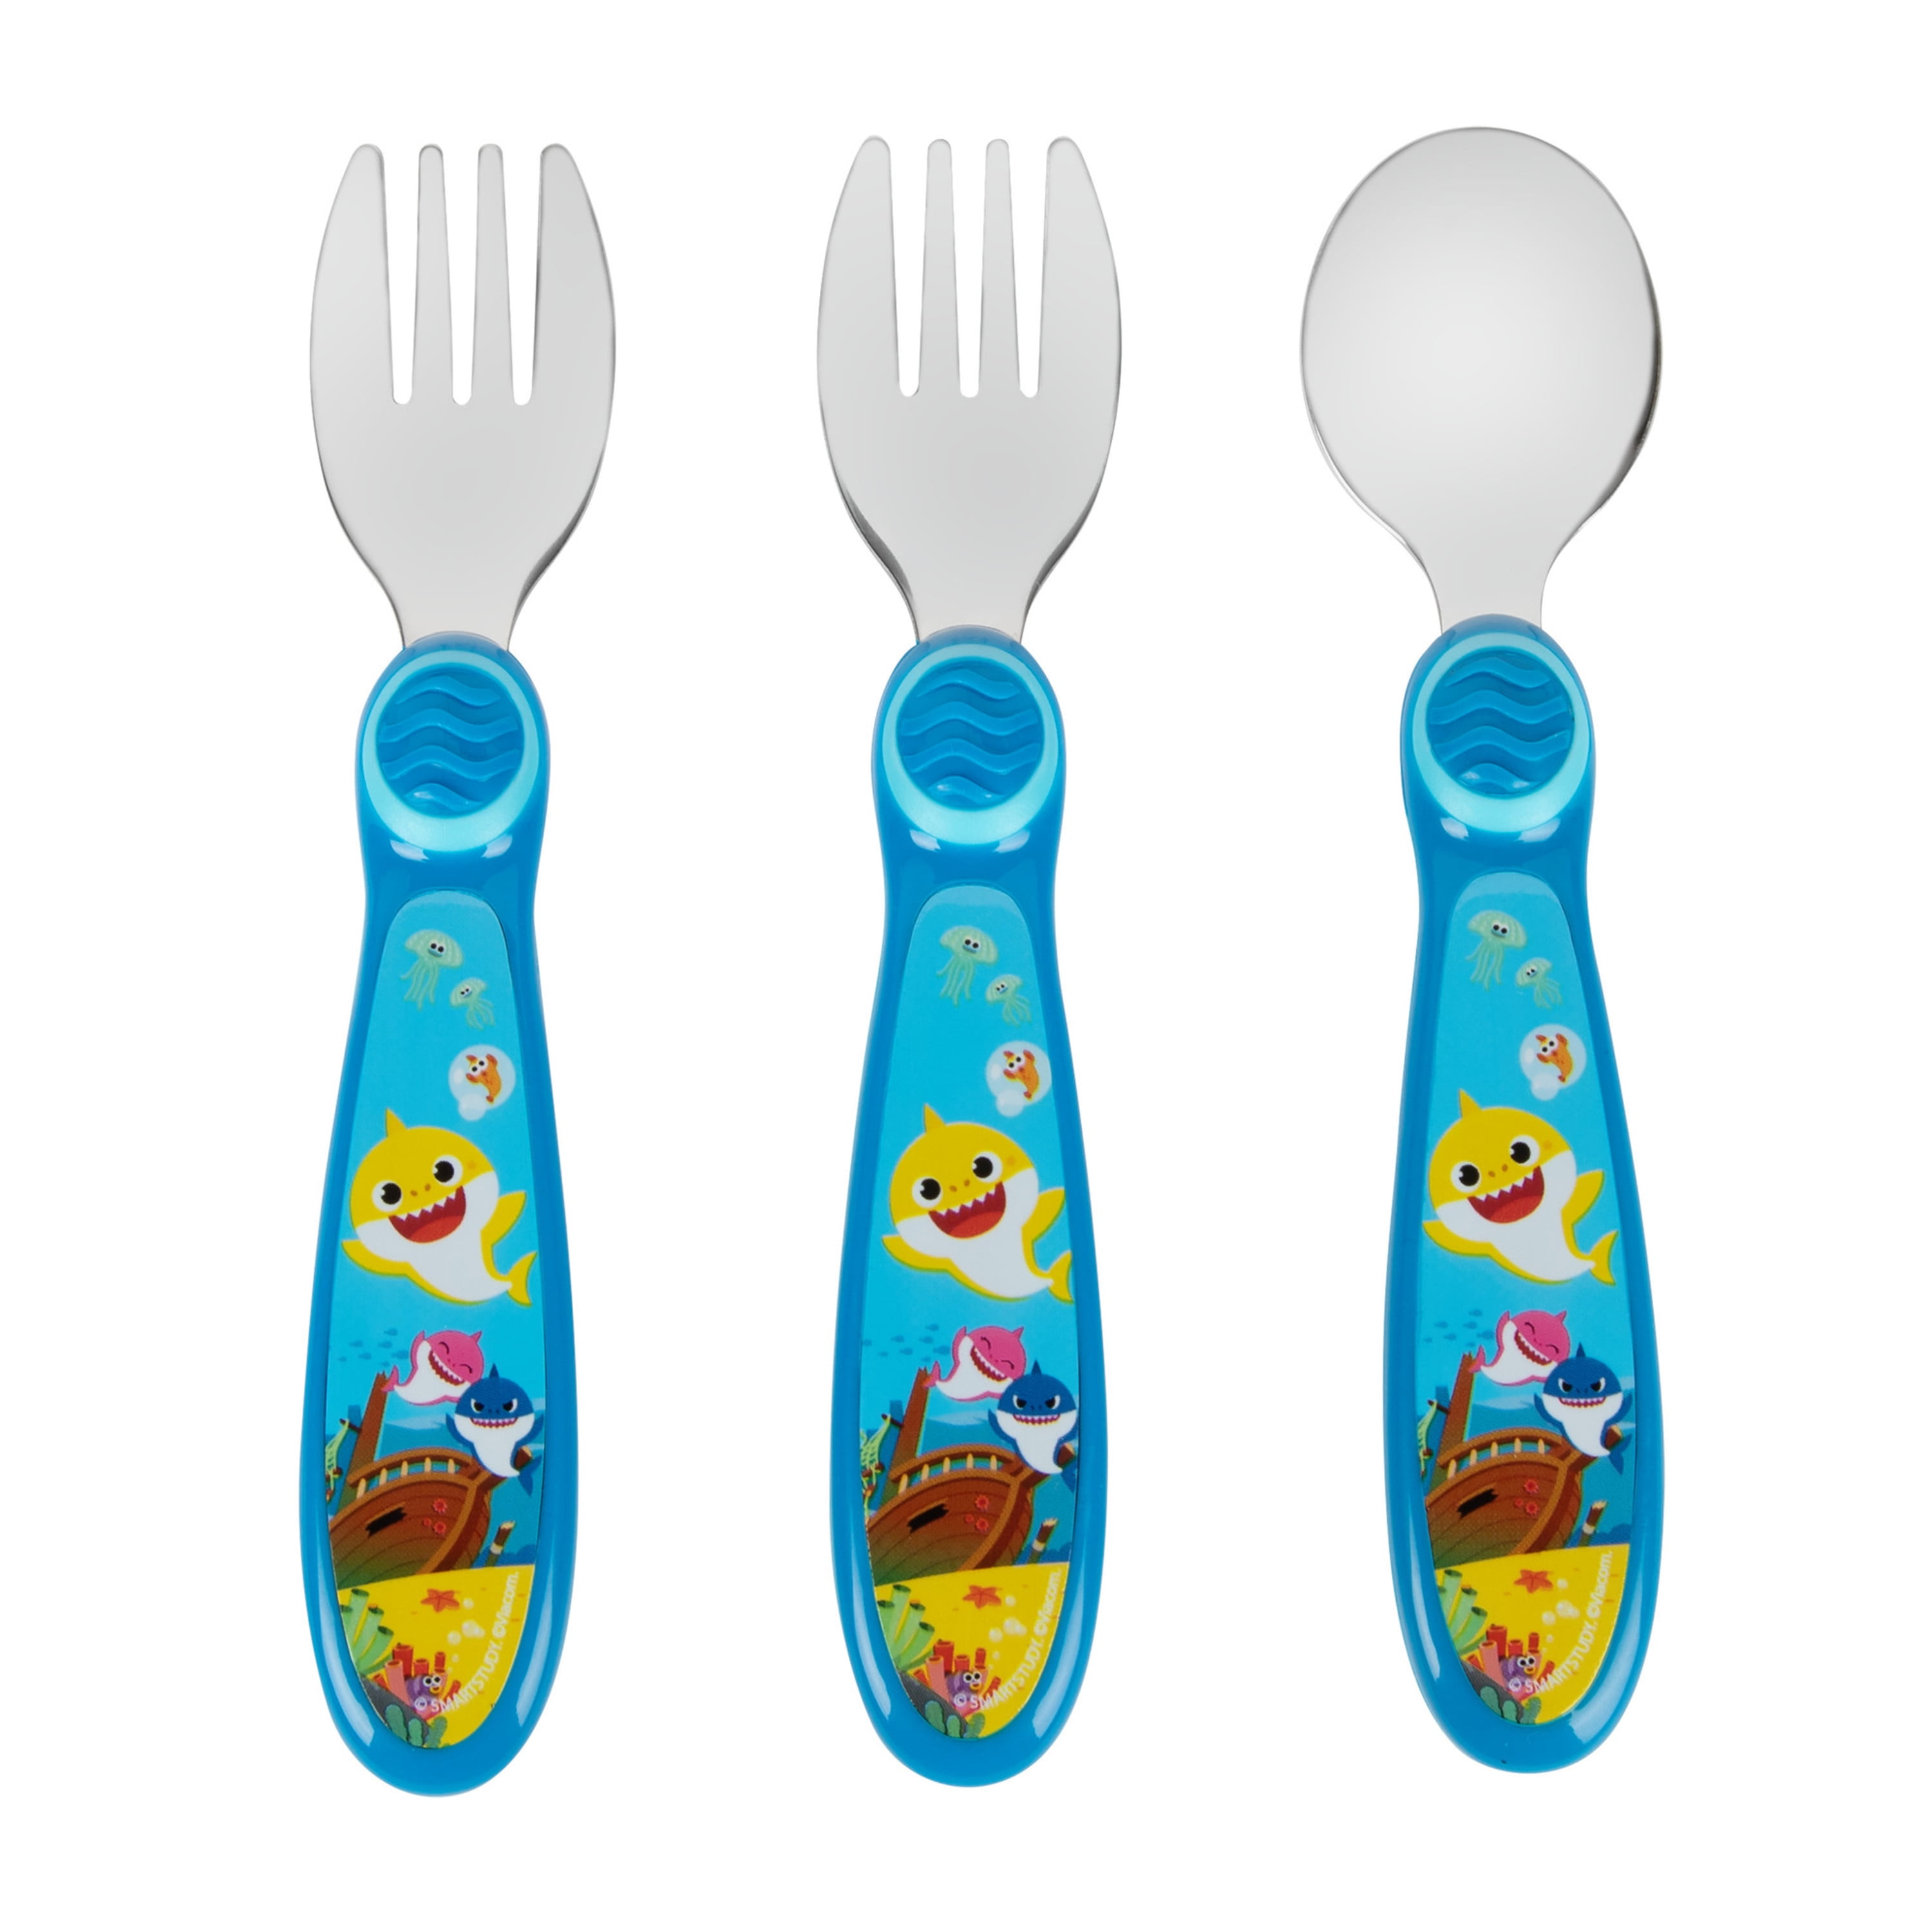 Pink Fong Baby Shark Toddler Forks and Spoon Set - 3 Pieces - Dishwasher Safe Utensils